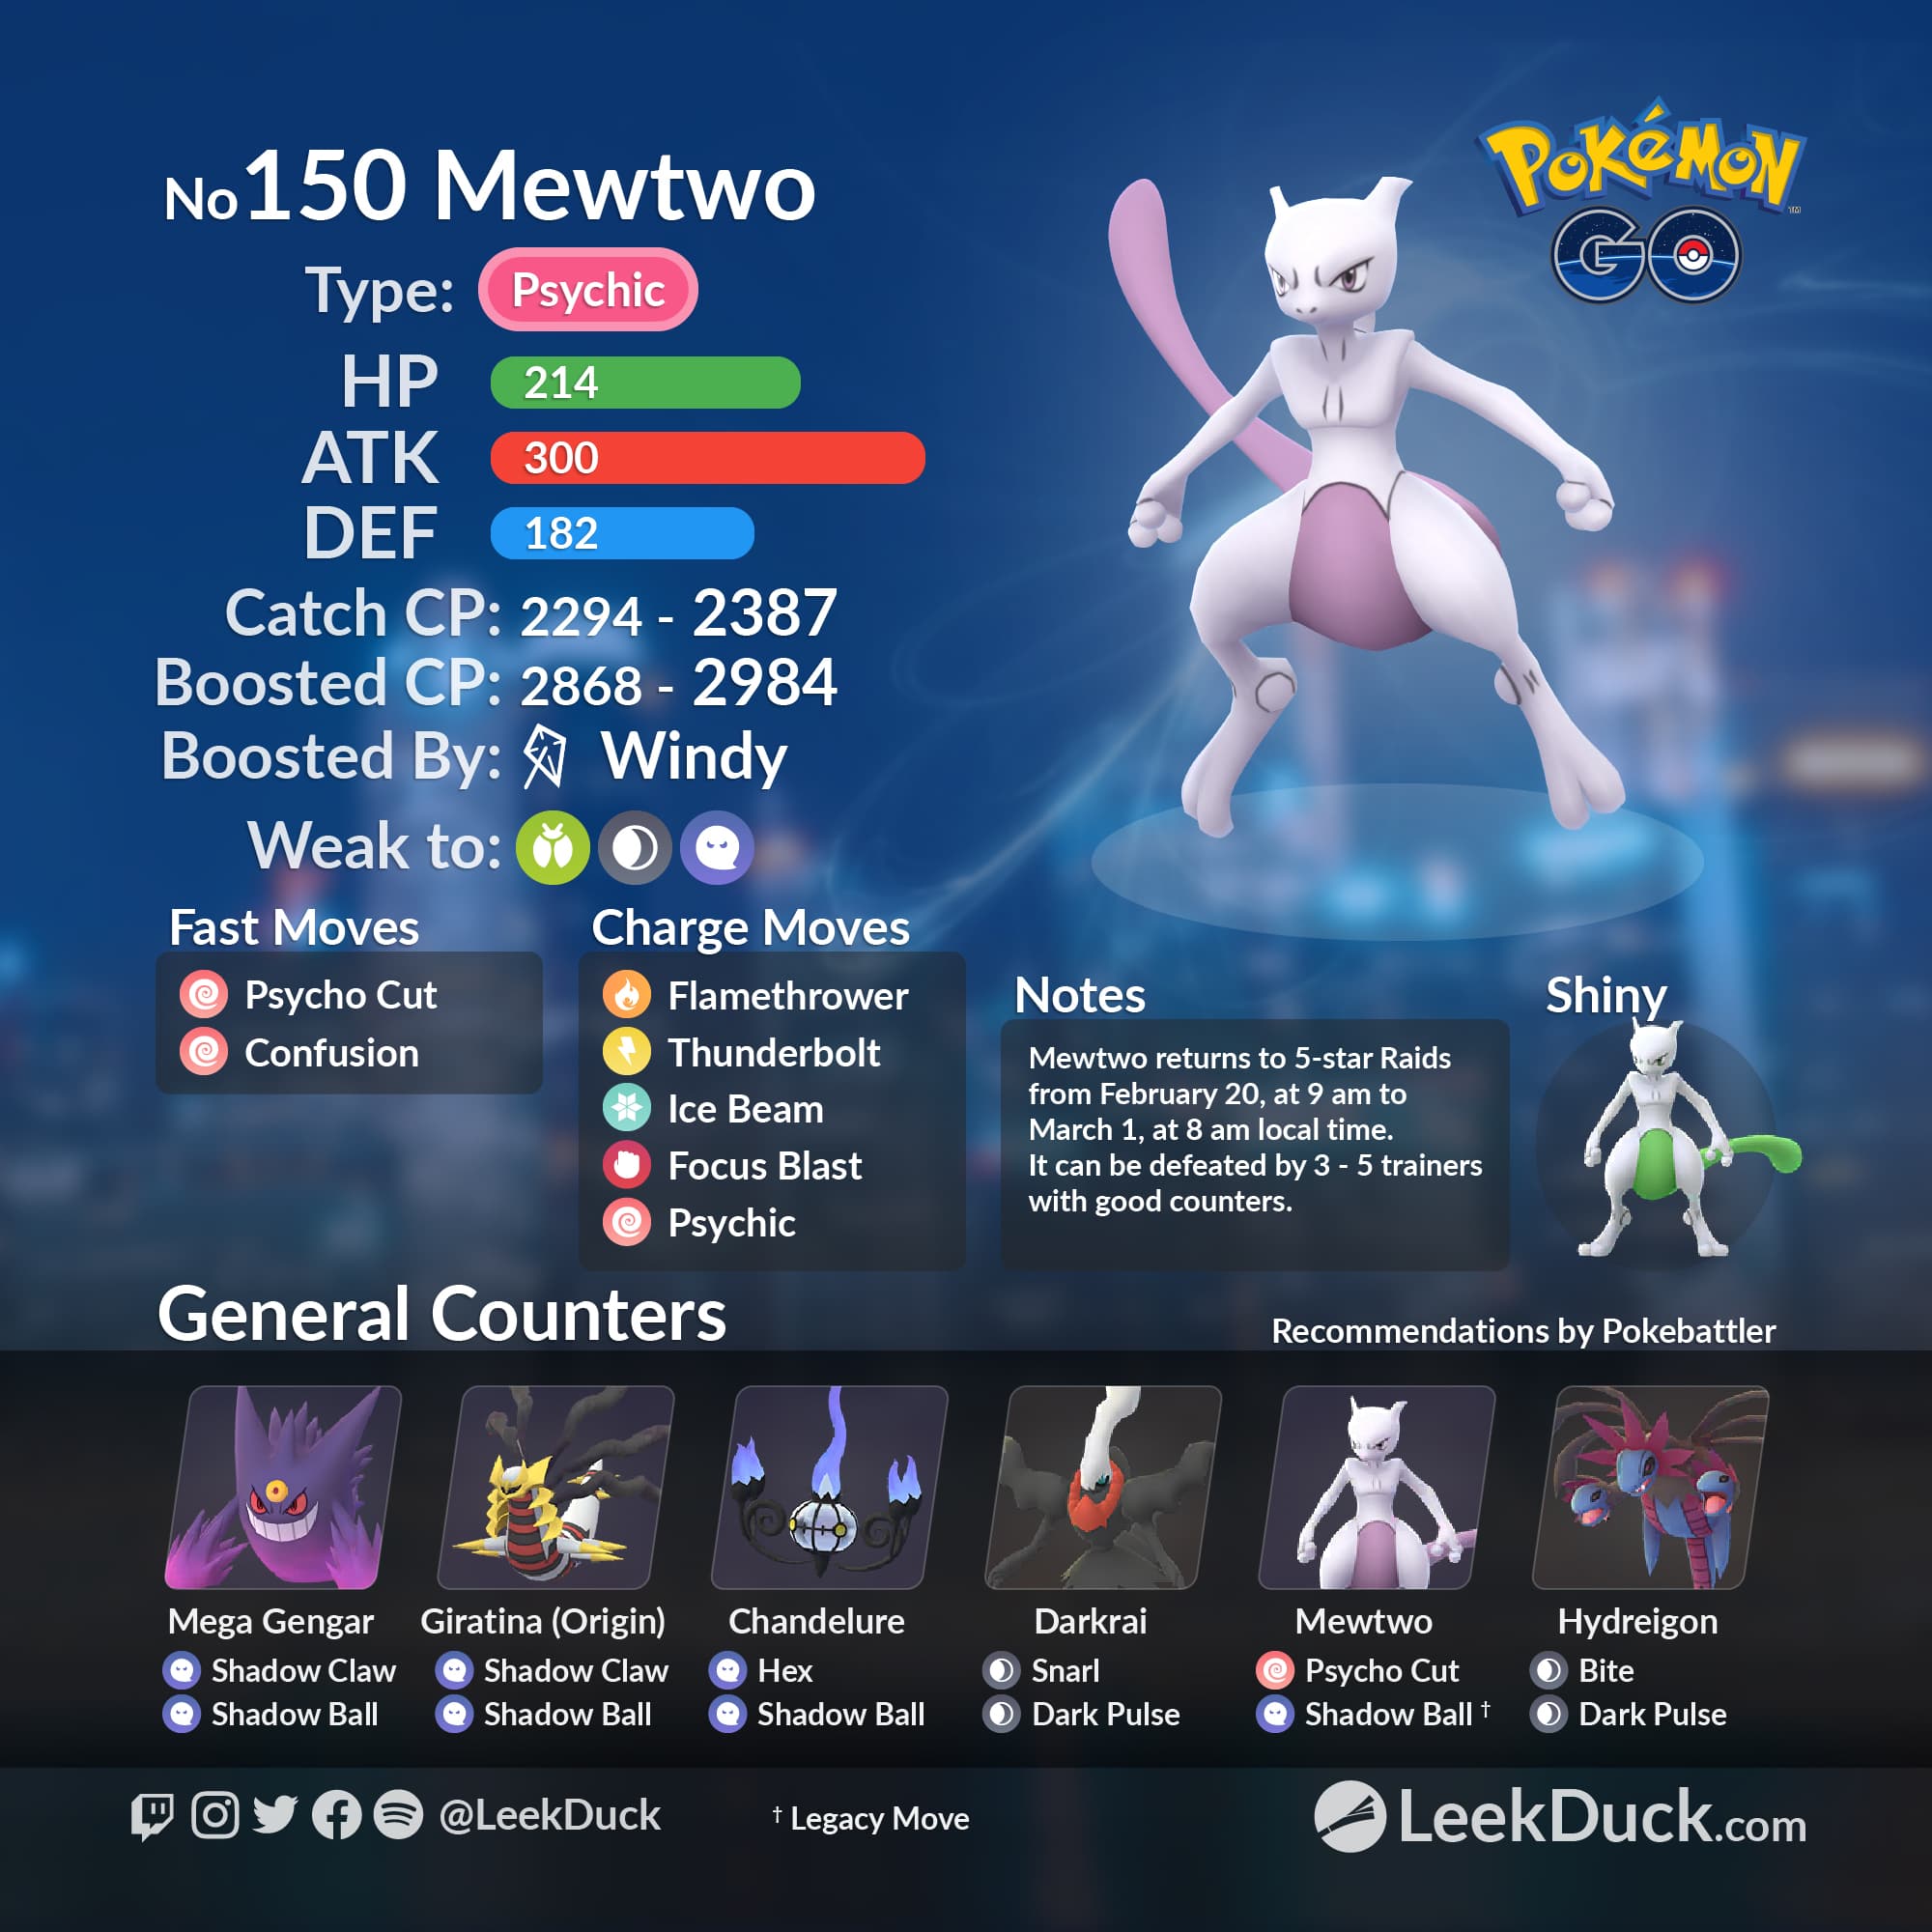 Mewtwo New Movesets In Pokemon Go Analysis Ice Beam, Flamethrower, &  Thunderbolt 